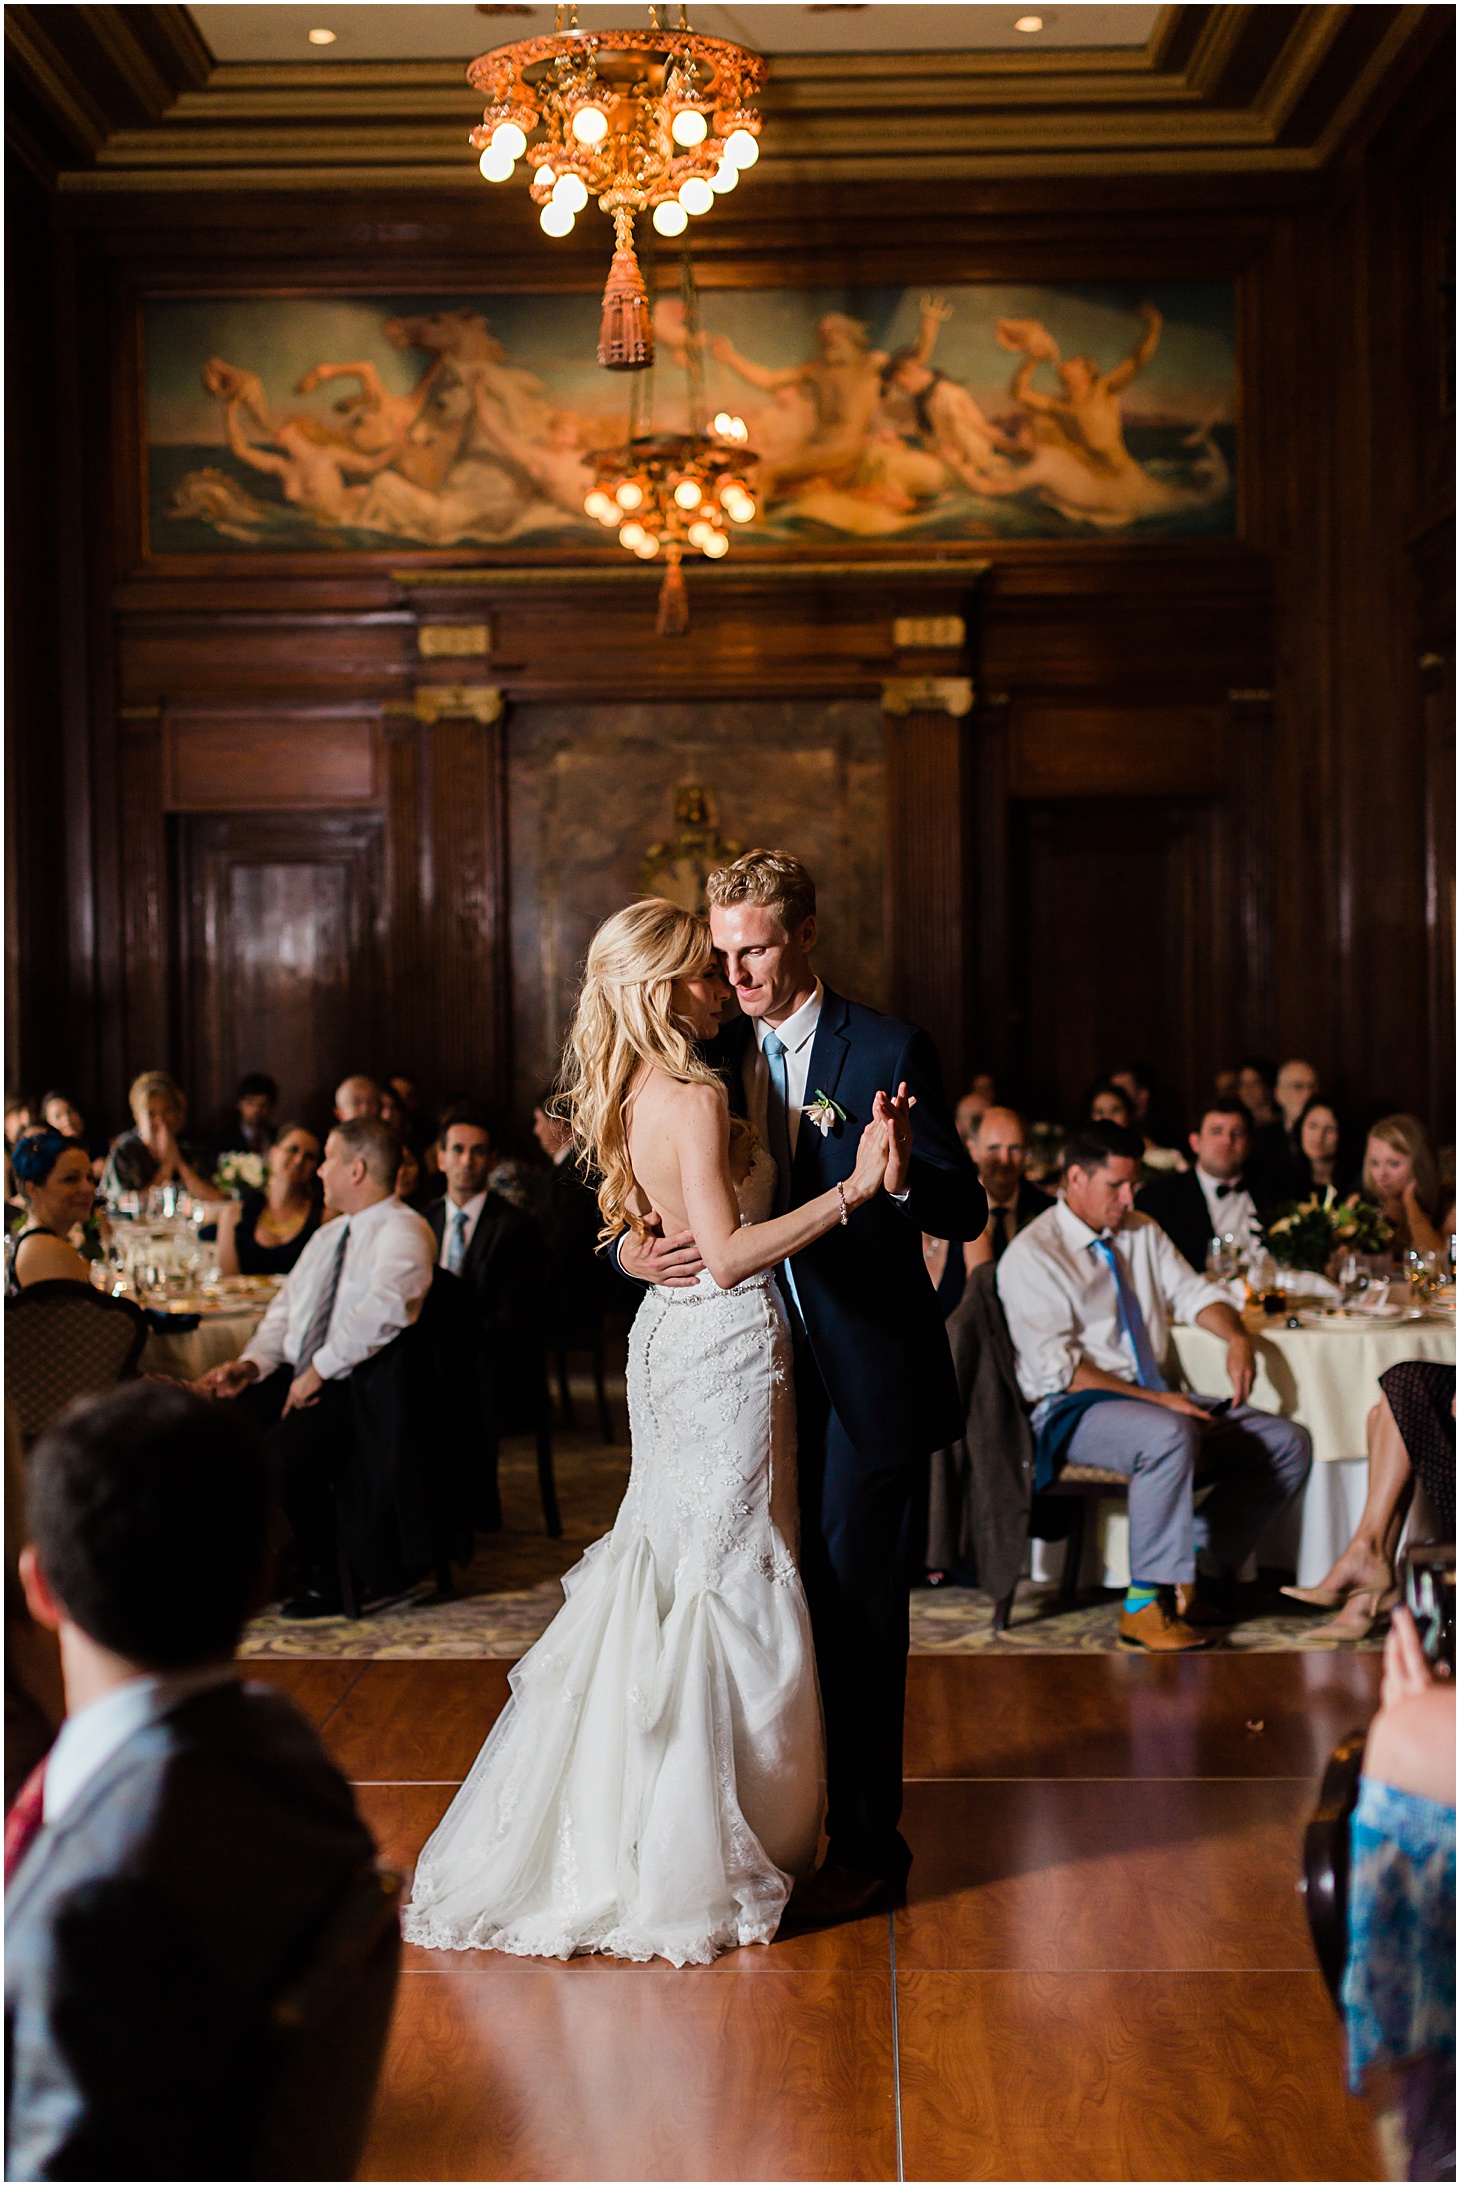 The Army & Navy Club Wedding | Top Washington DC wedding photographer Sarah Bradshaw